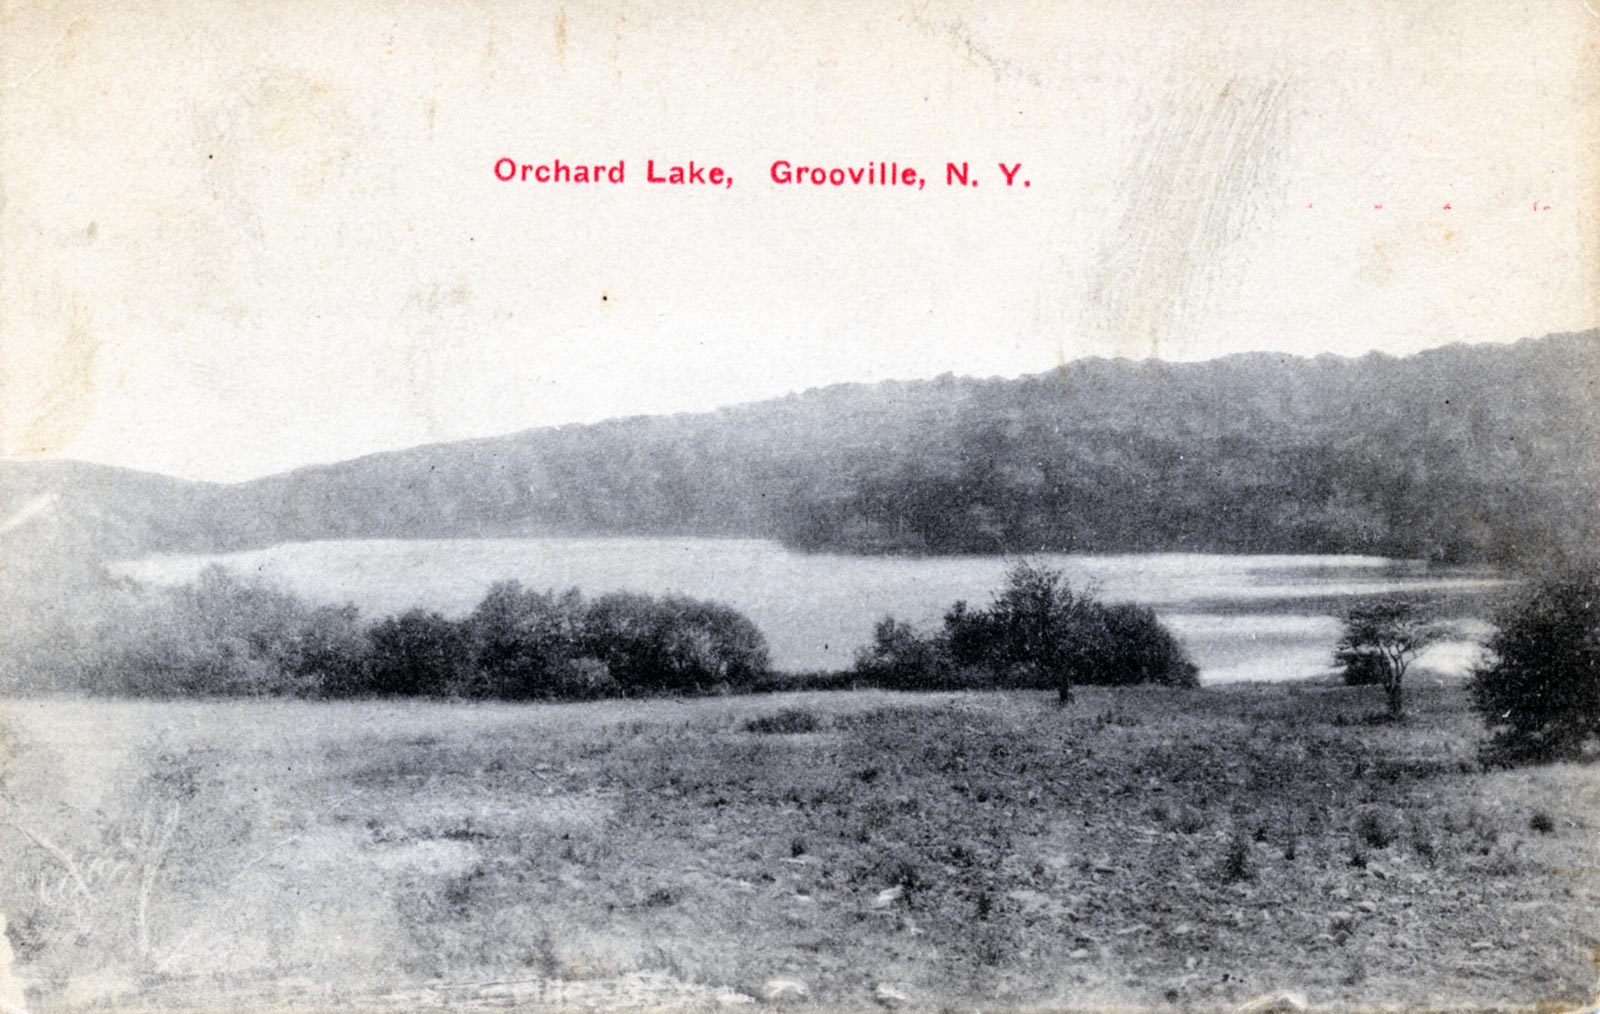 1916 postcard of Orchard Lake